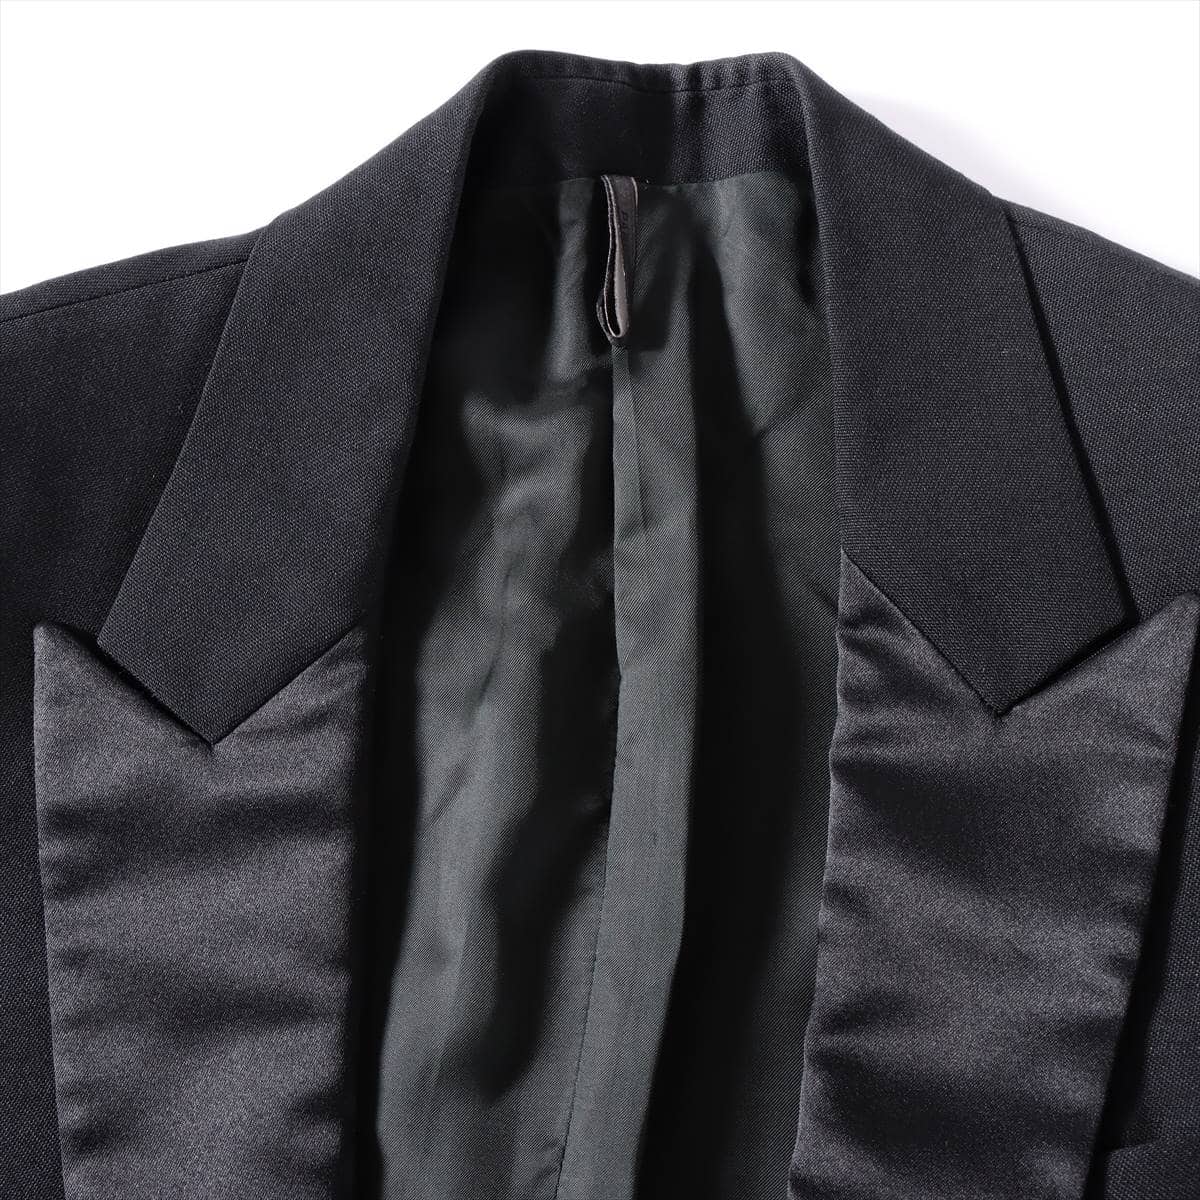 DIOR HOMME 07AW Wool & mohair Suit jacket 44 Men's Black  smoking tubing